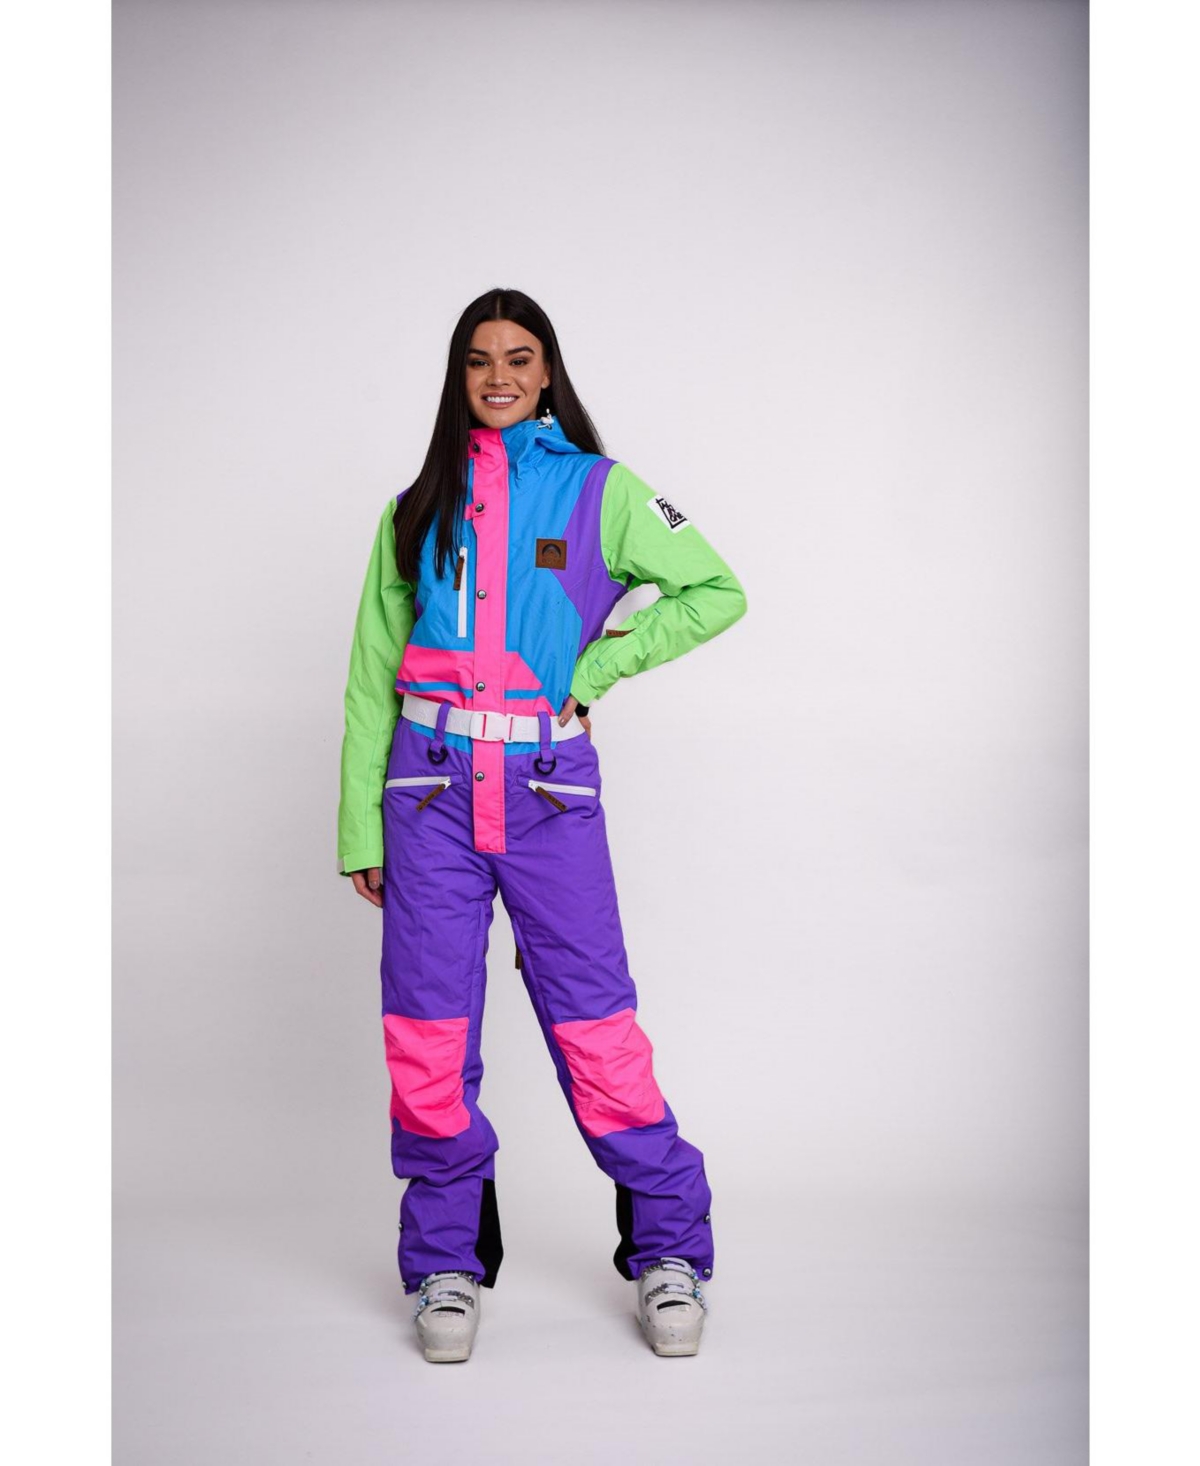 Powder Hound Ski Suit - Women's - Multi